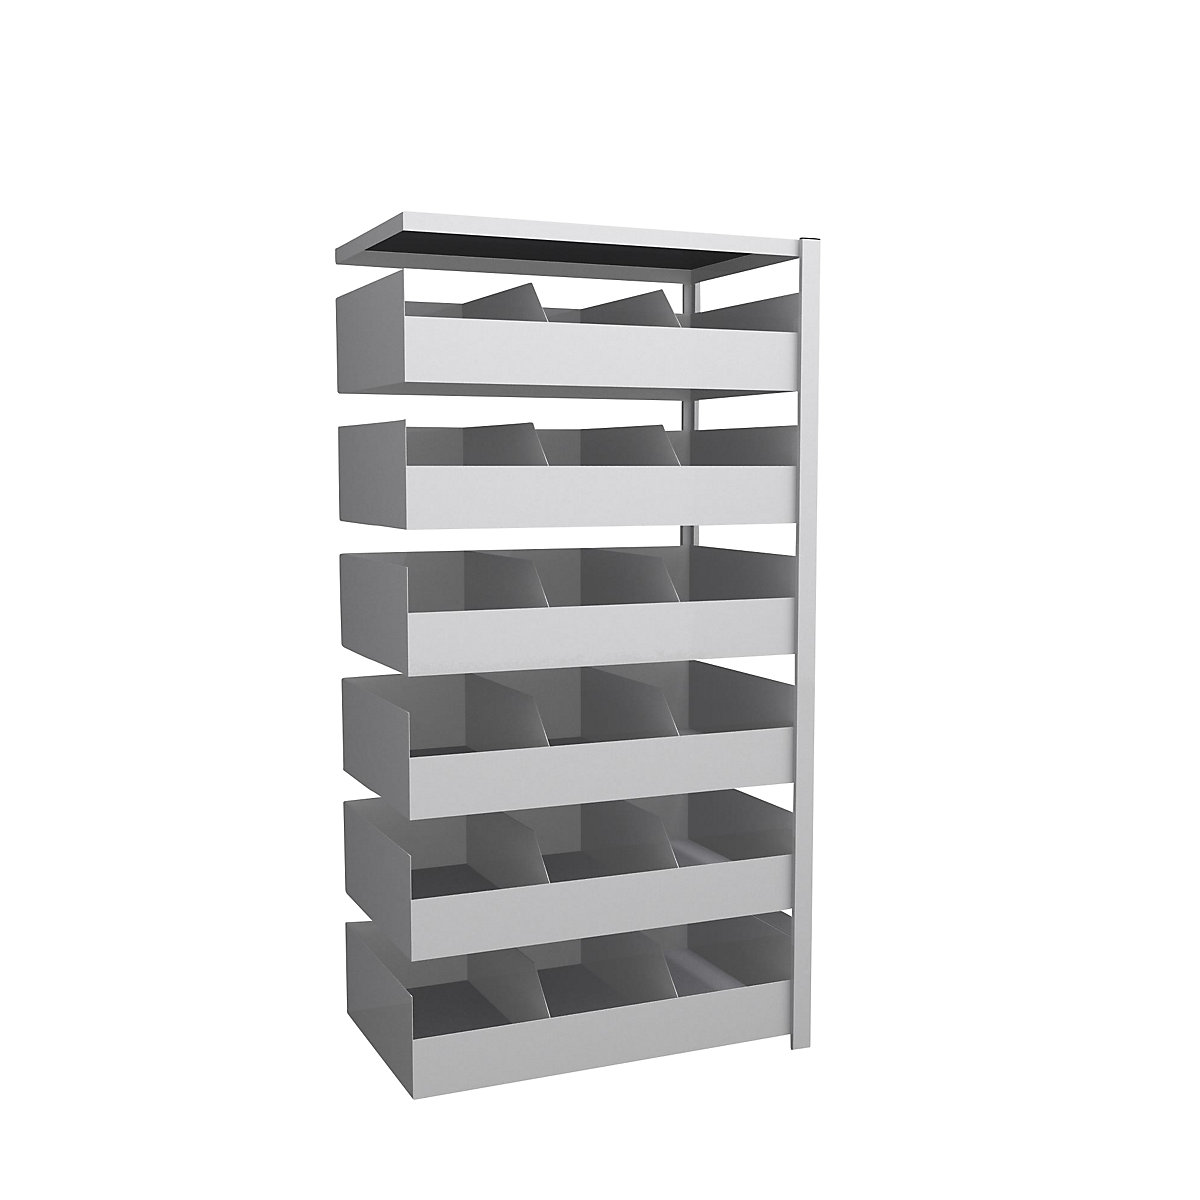 Bulk material shelving unit – hofe, shelf height 2000 mm, extension shelf unit, WxD 1010 x 635 mm